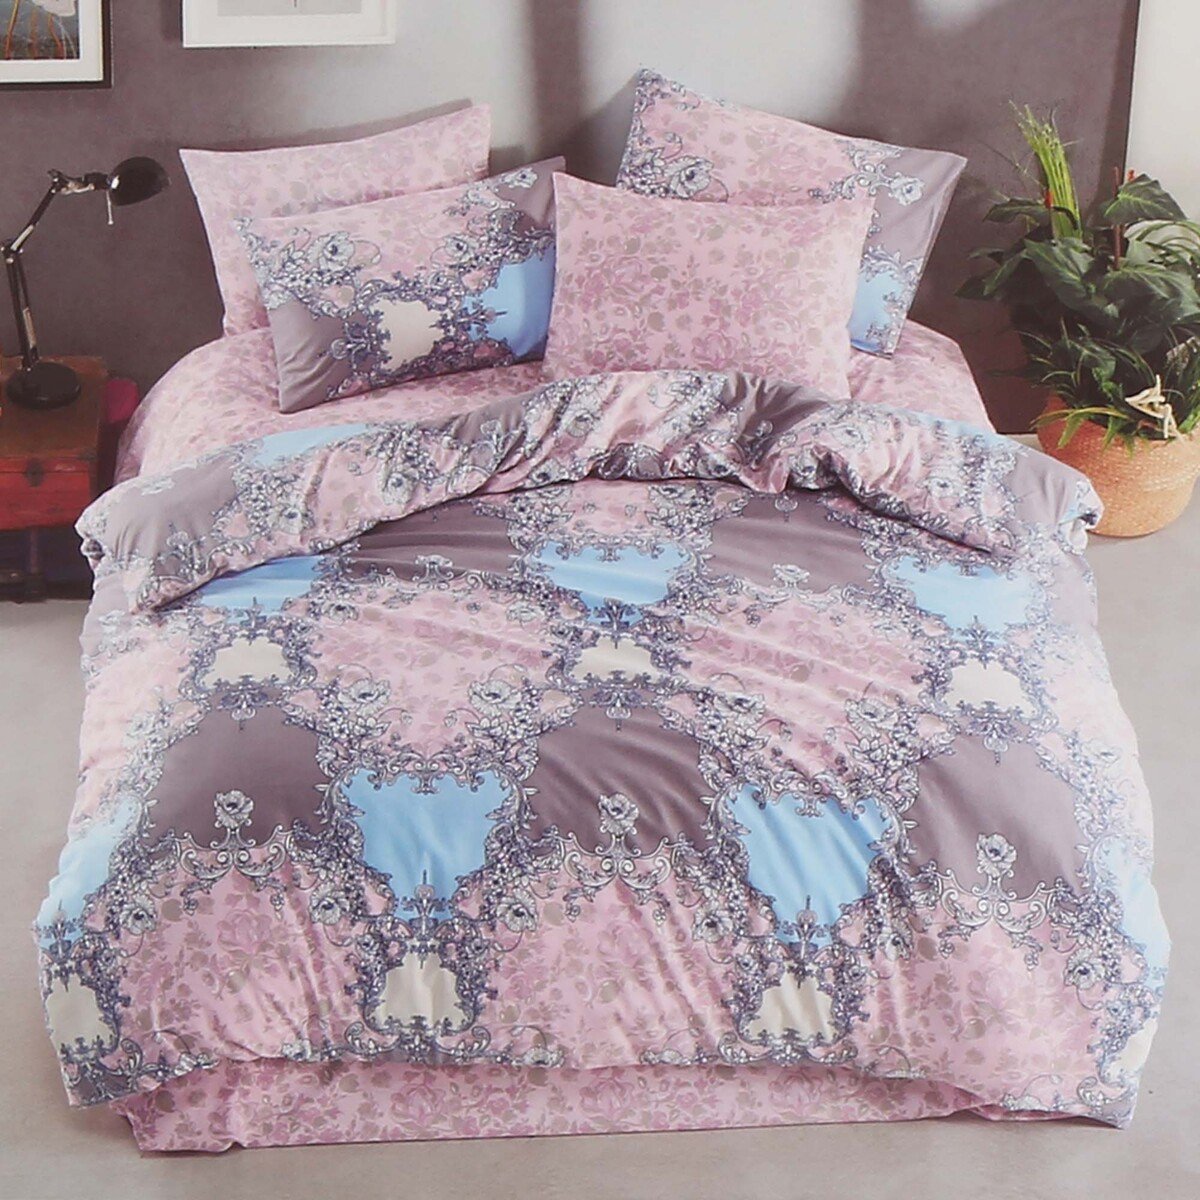 Cortigiani Bedsheet 240x260cm Assorted Online At Best Price Bed Sheets Lulu Ksa 4127